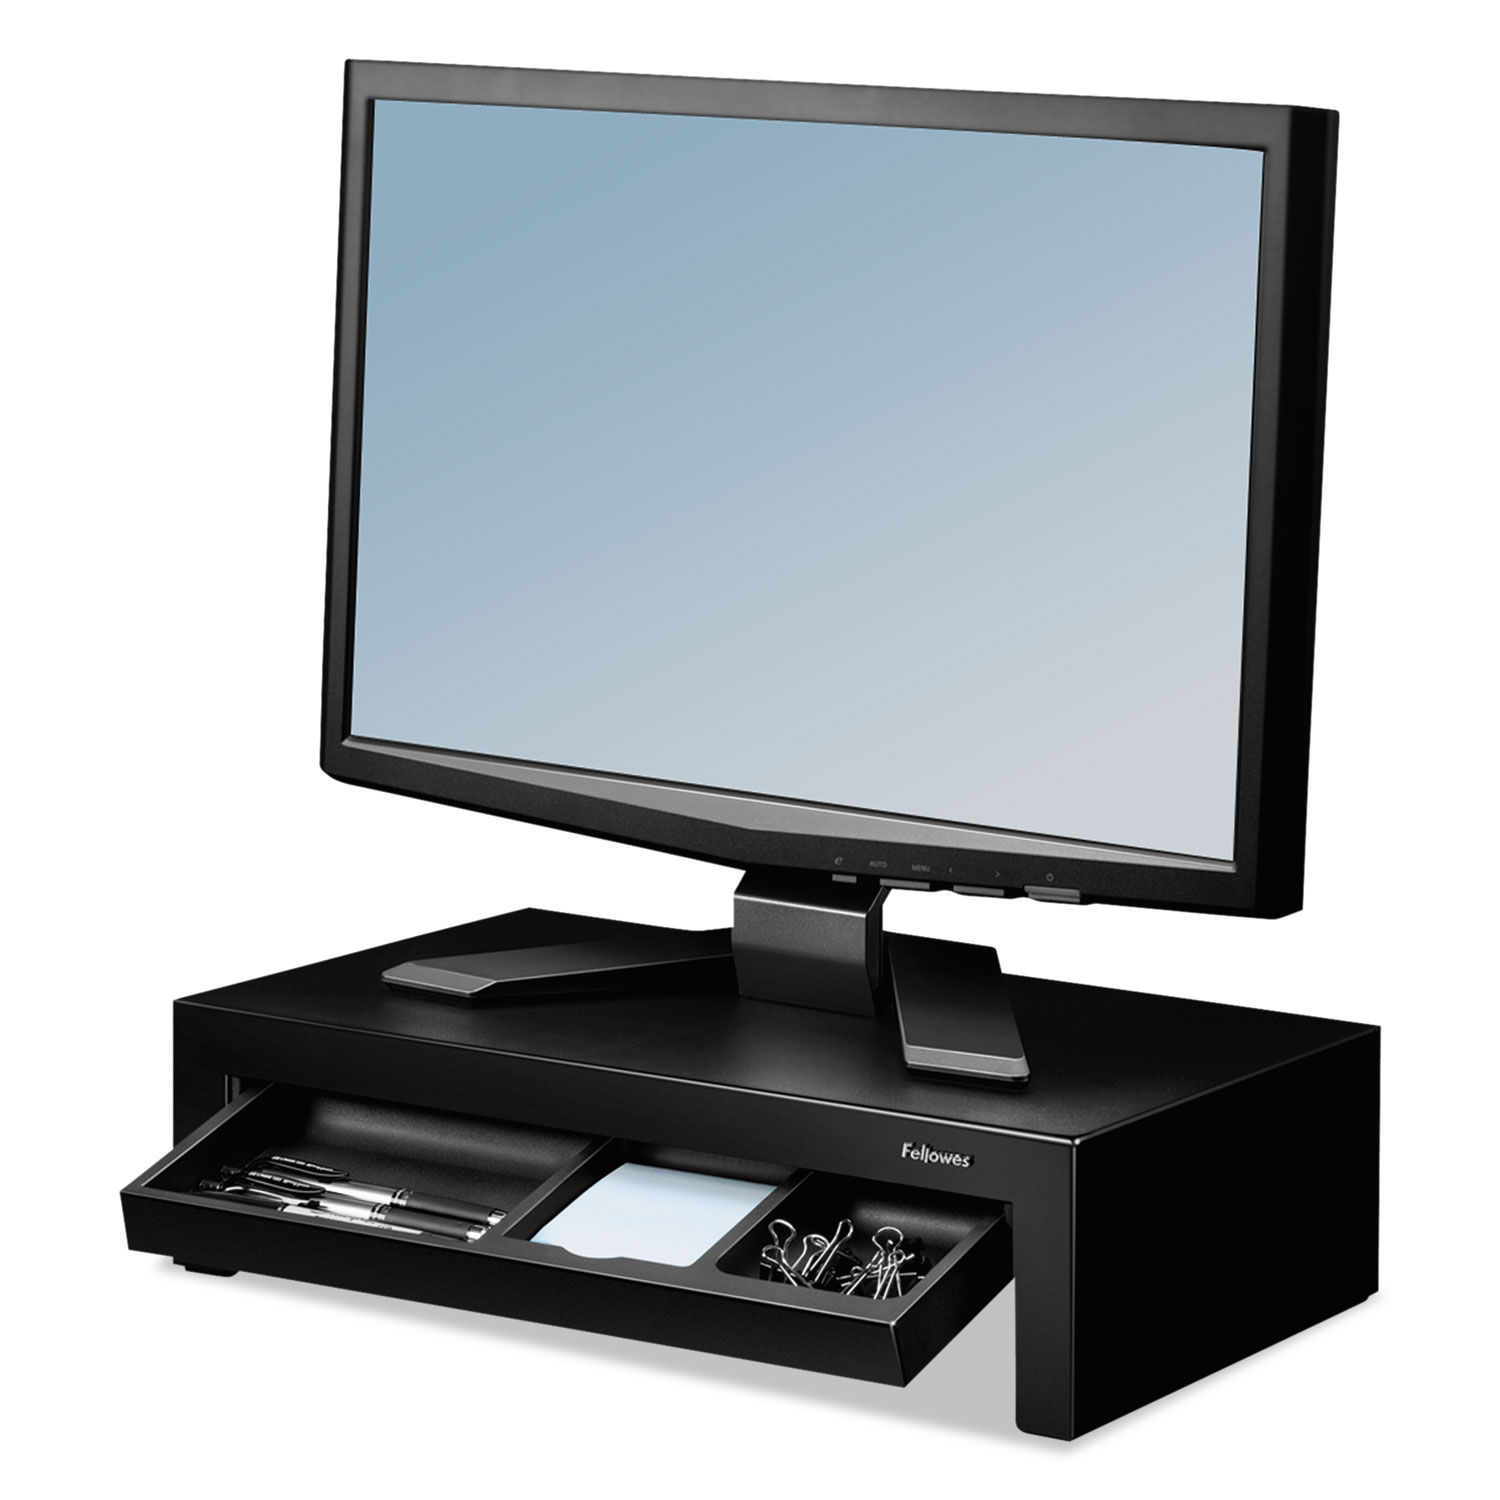  Fellowes 8038101 Adjustable Monitor Riser with Storage Tray, 16 x 9 3/8 x 6, Black Pearl (FEL8038101) 